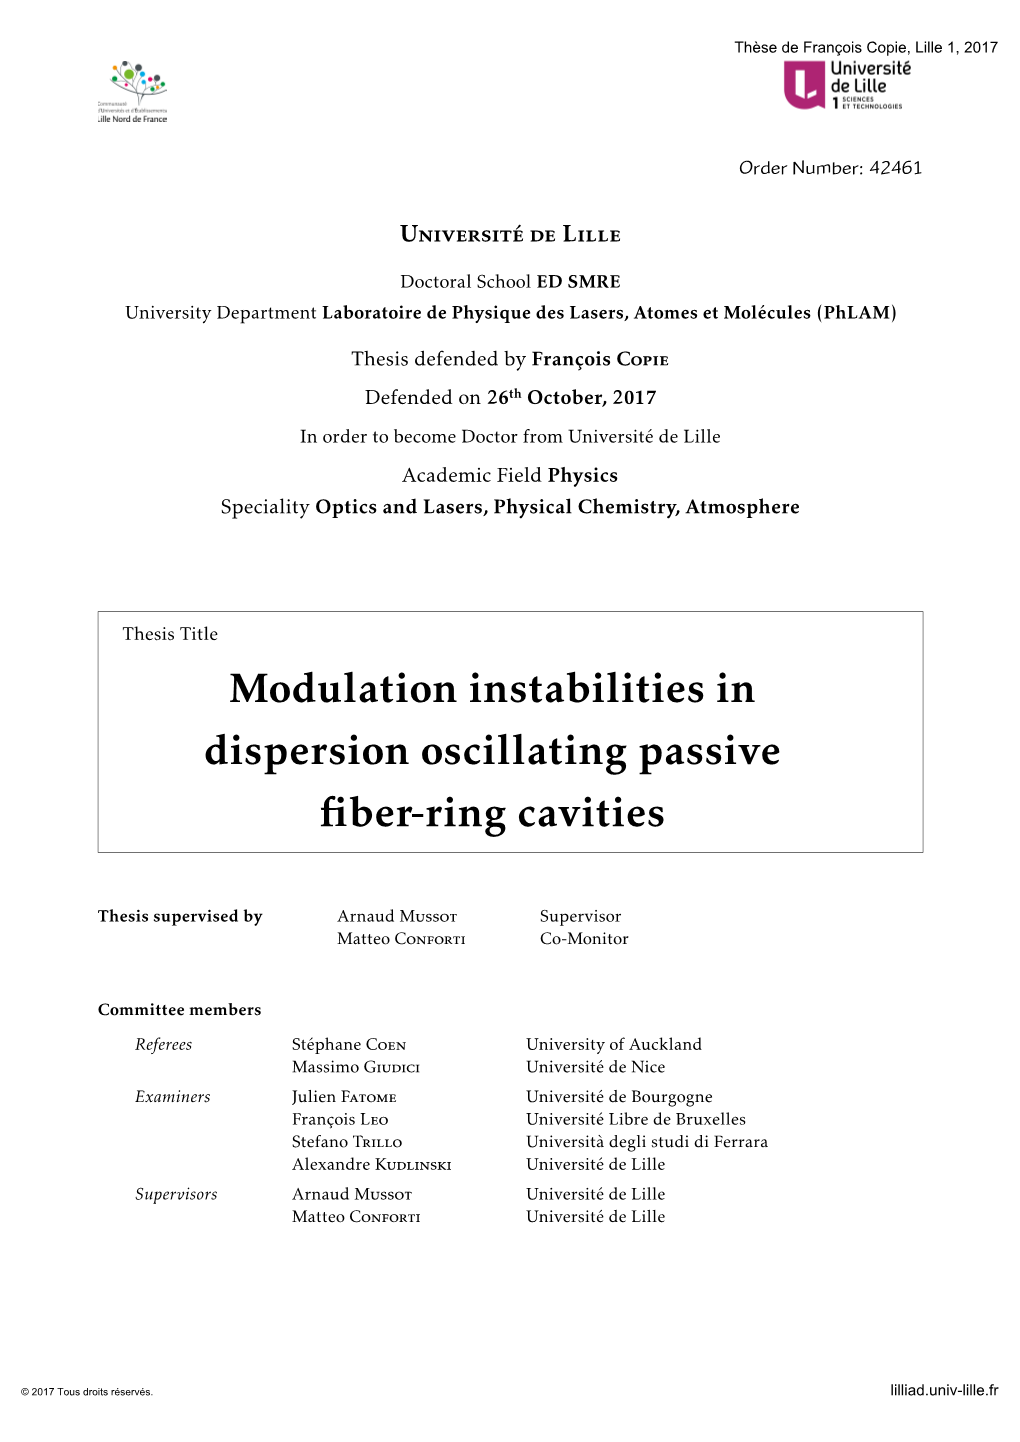 Modulation Instabilities in Dispersion Oscillating Passive Fiber-Ring Cavities